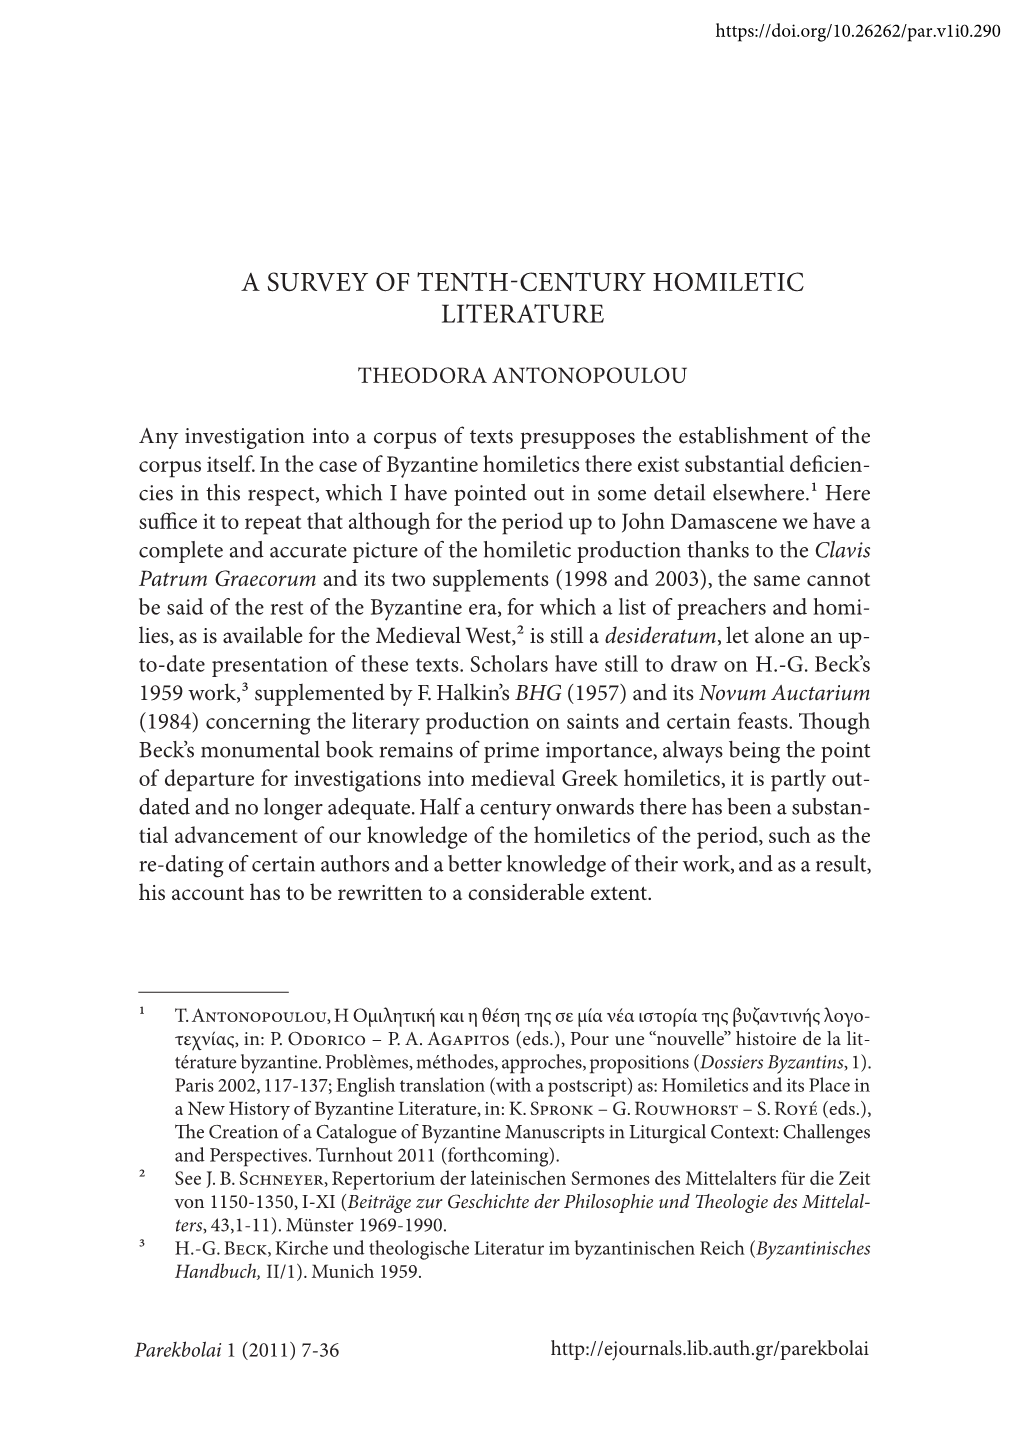 A Survey of Tenth-Century Homiletic Literature